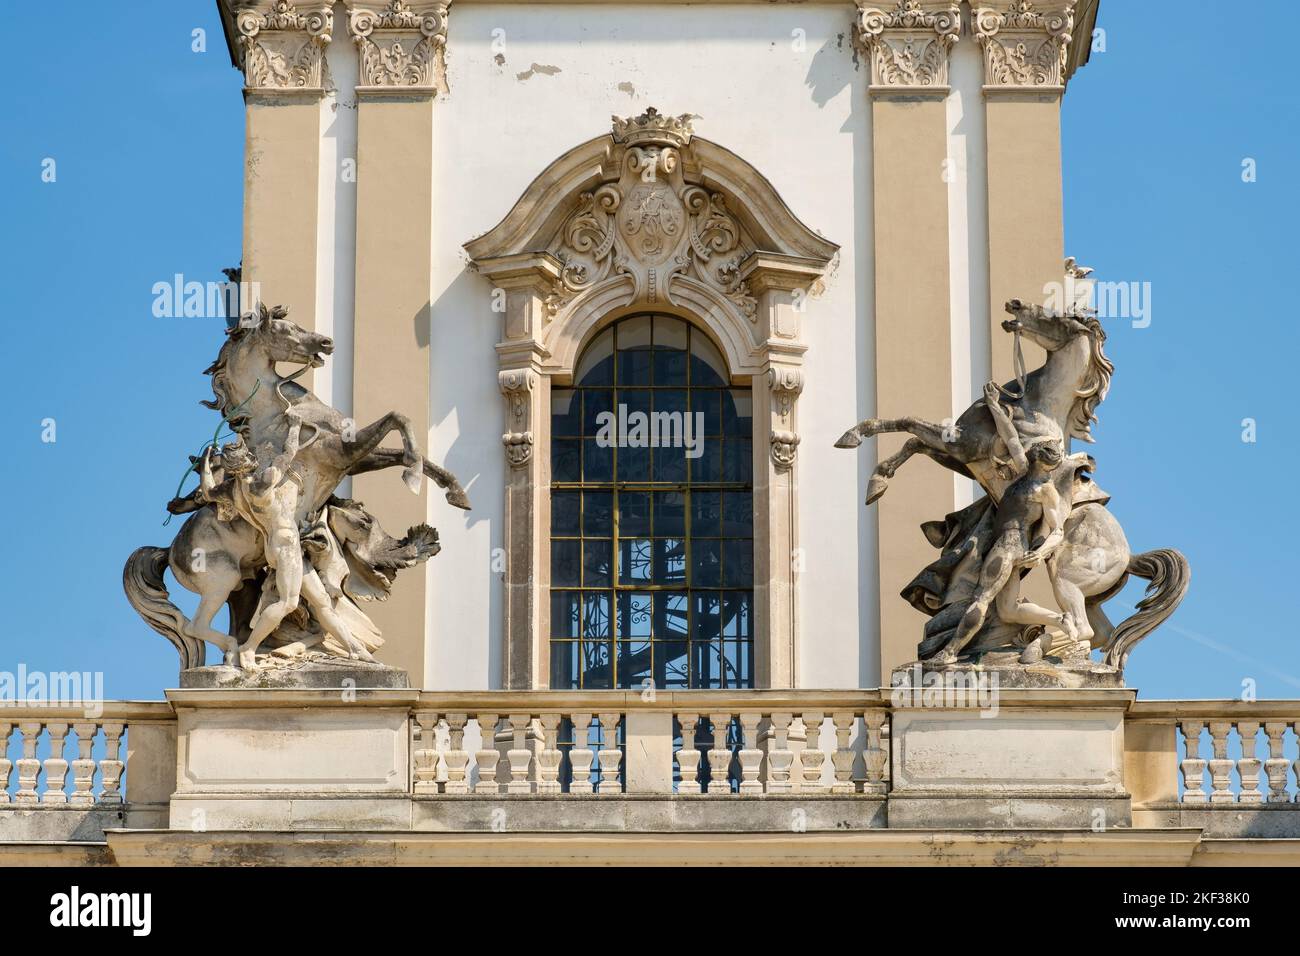 Pferdedottern auf dem Glockenturm des Festetics Palace - Keszthely, Ungarn Stockfoto